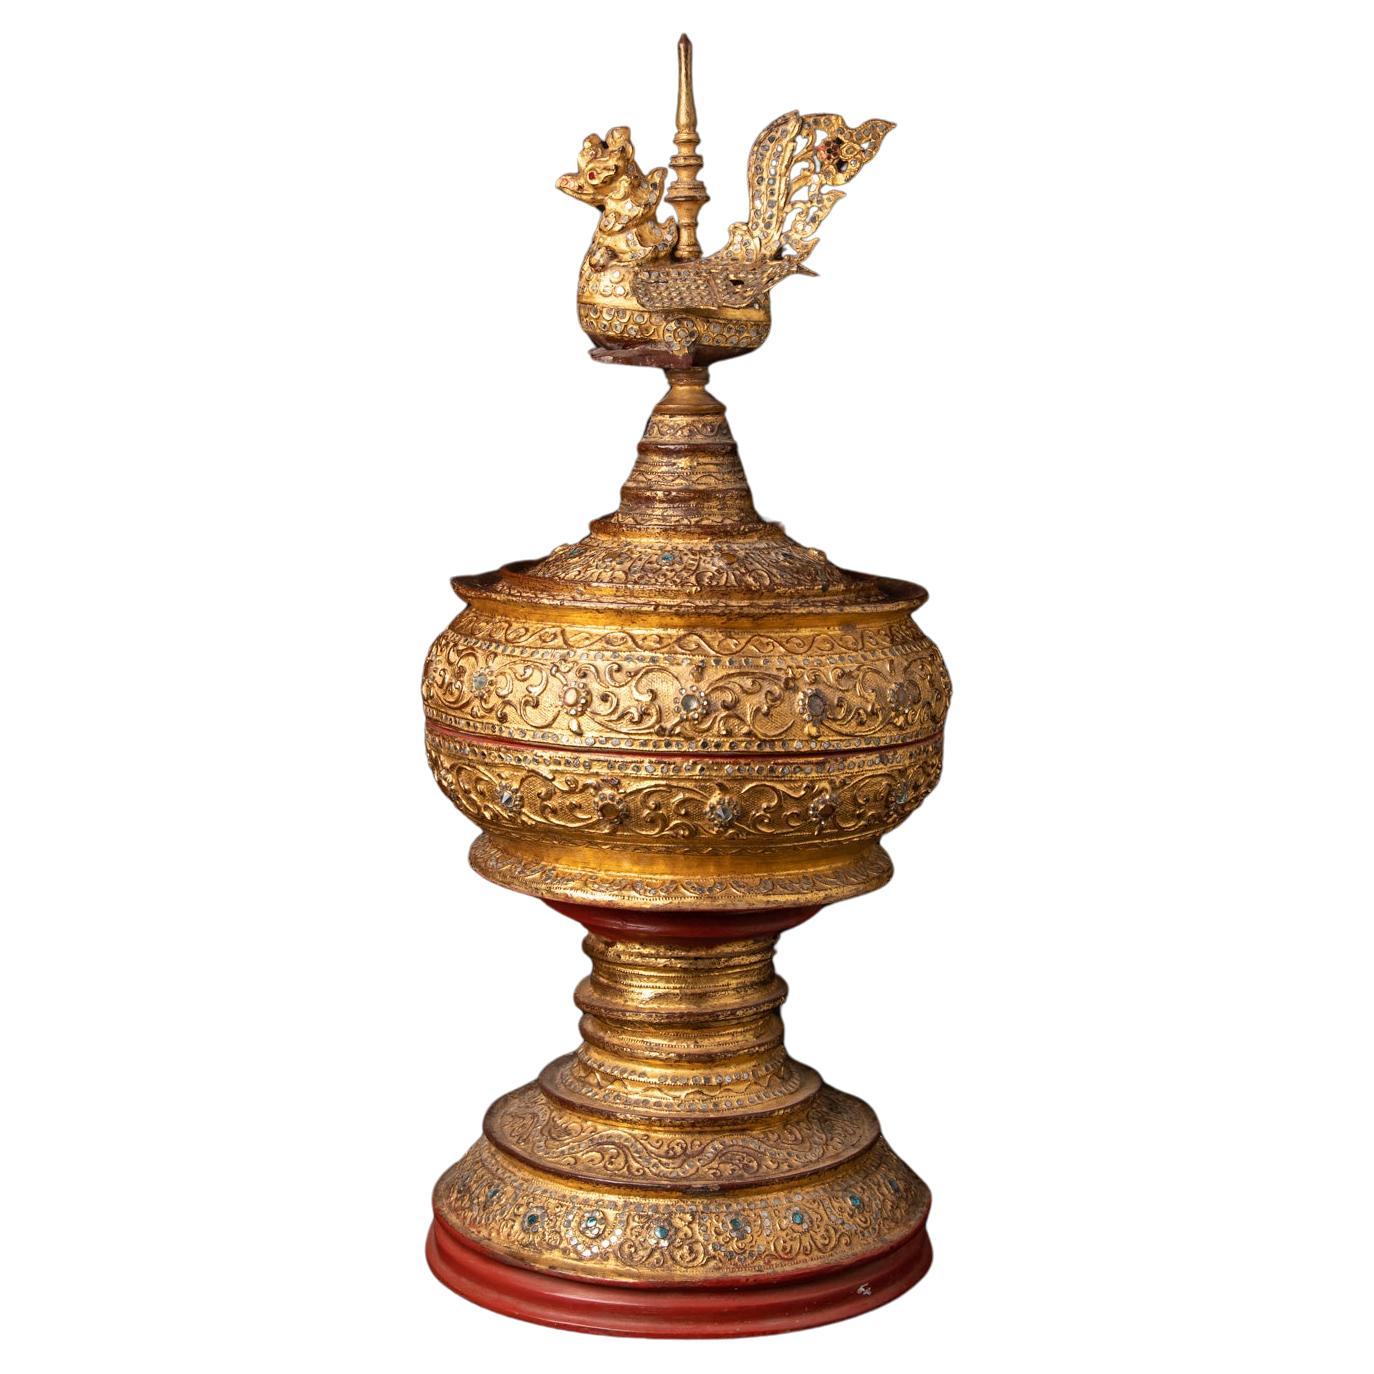 Antique gilded Burmese offering vessel from Burma - Original Buddhas For Sale